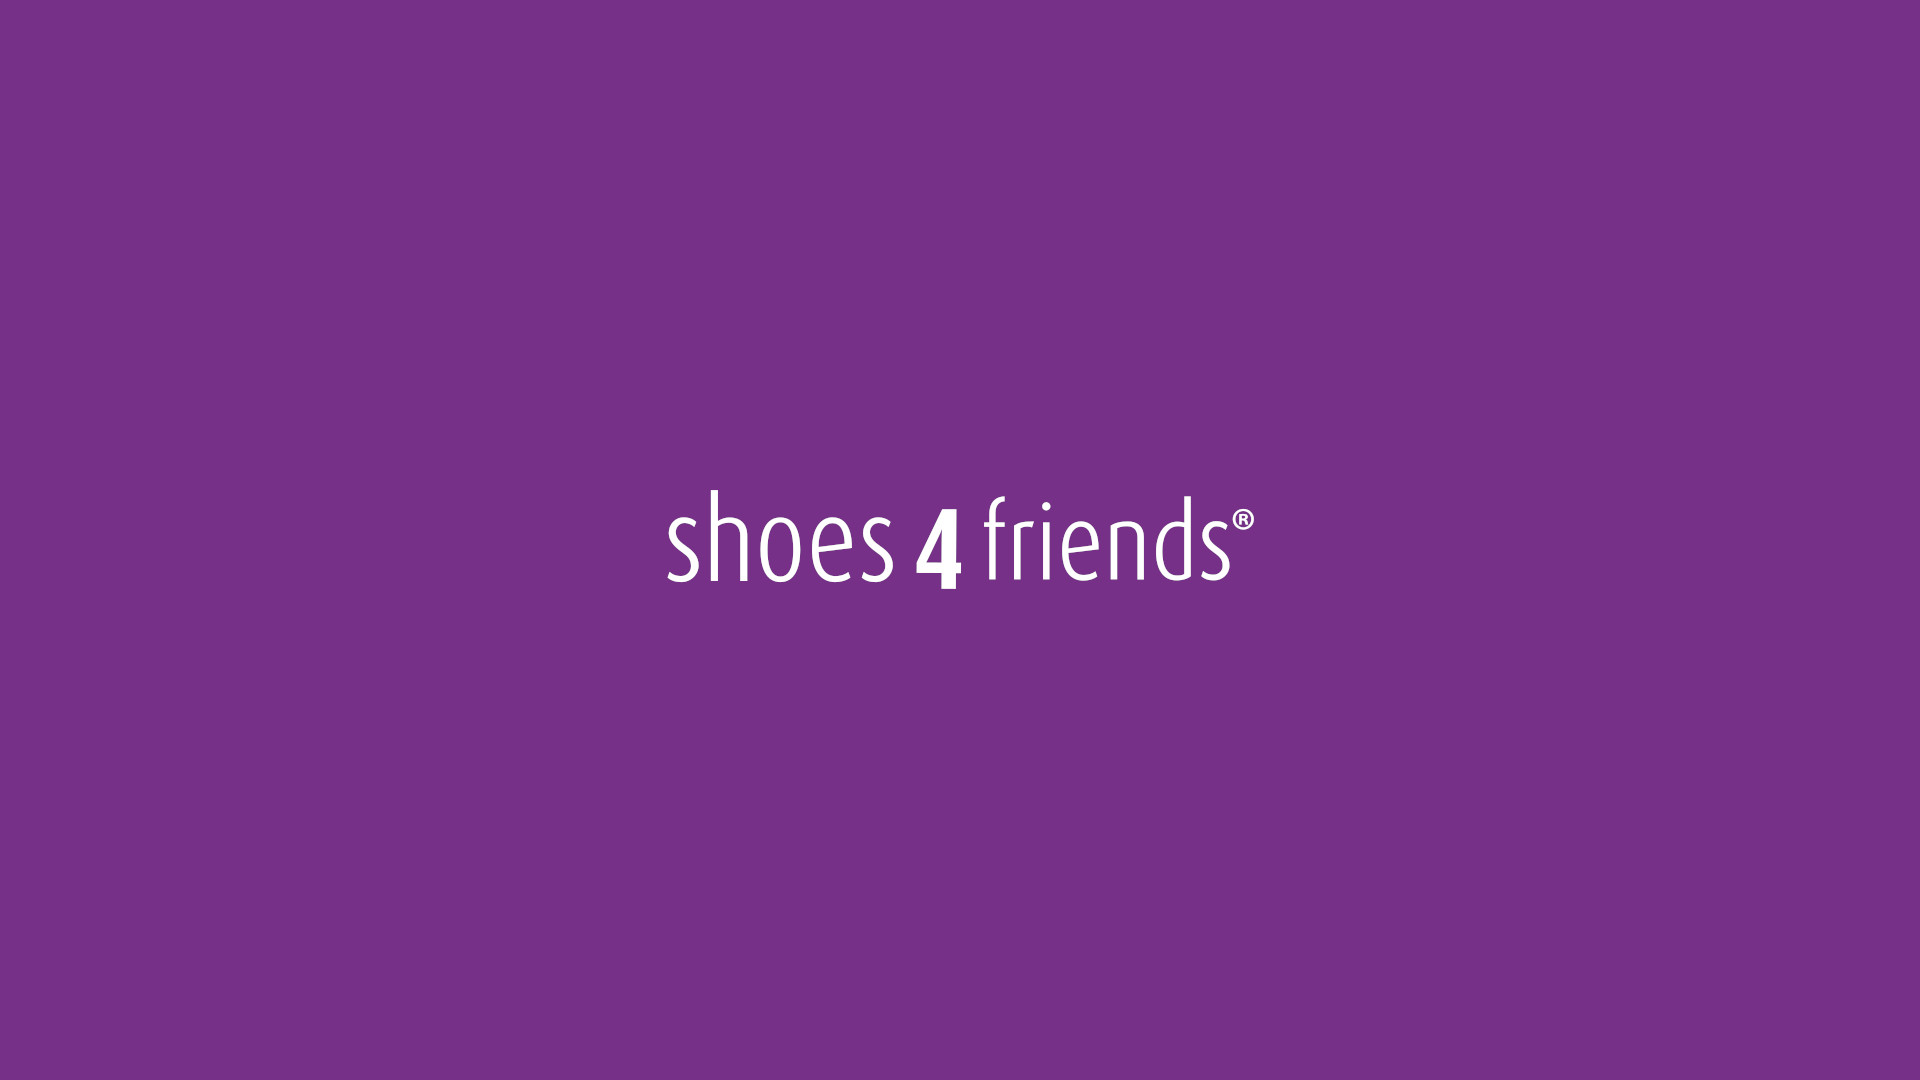 shoes4friends - Marktplatzkonzept